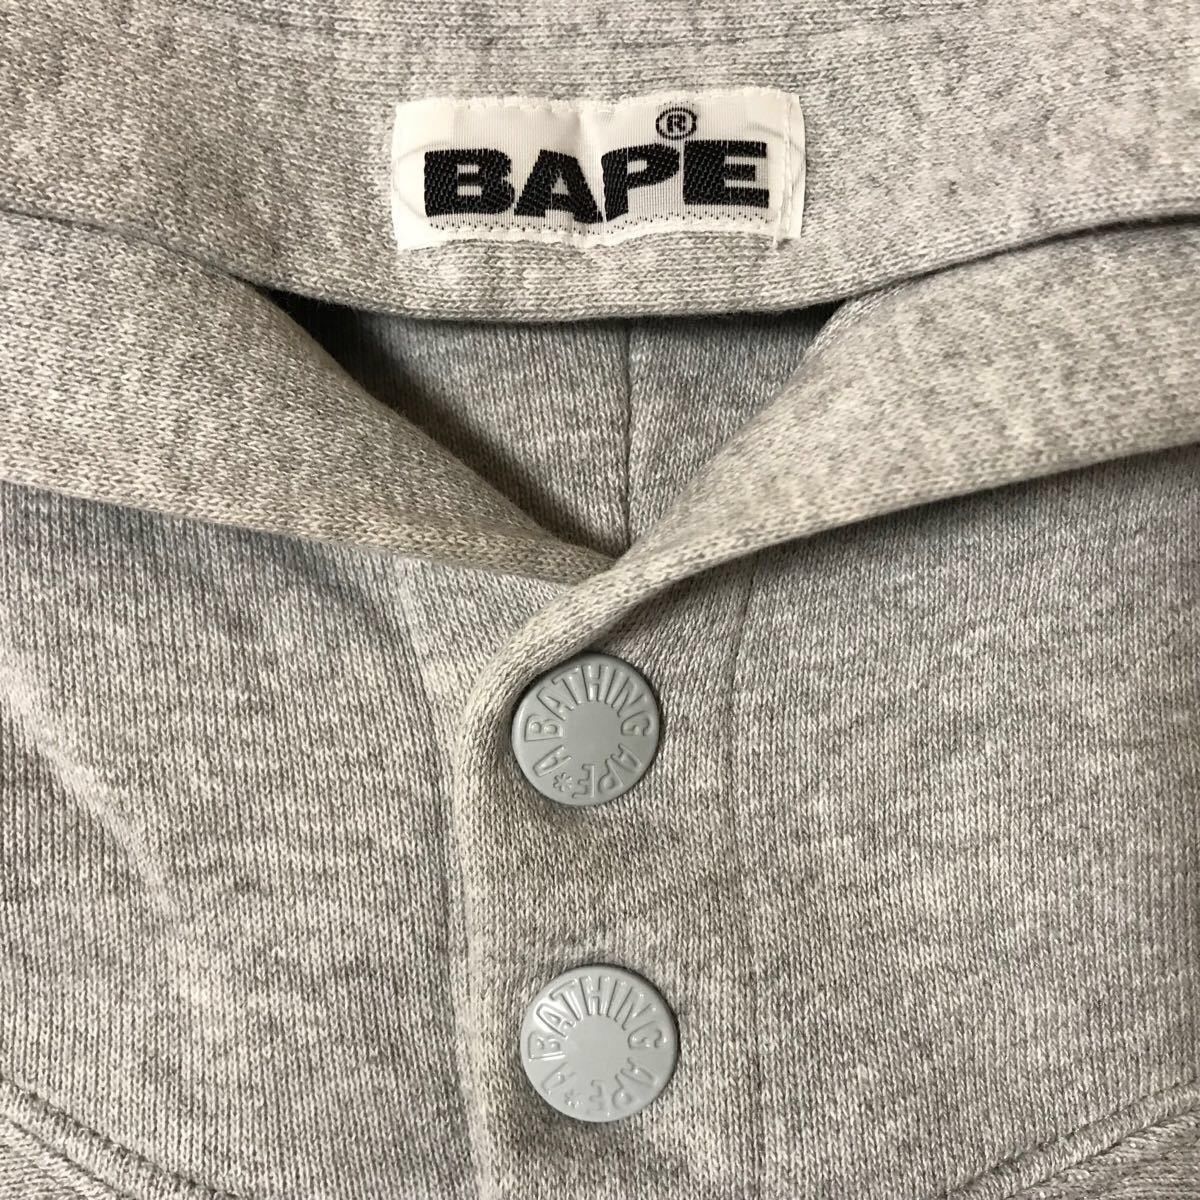 Bape Cash Money Record pullover hoodie Size US M / EU 48-50 / 2 - 4 Thumbnail